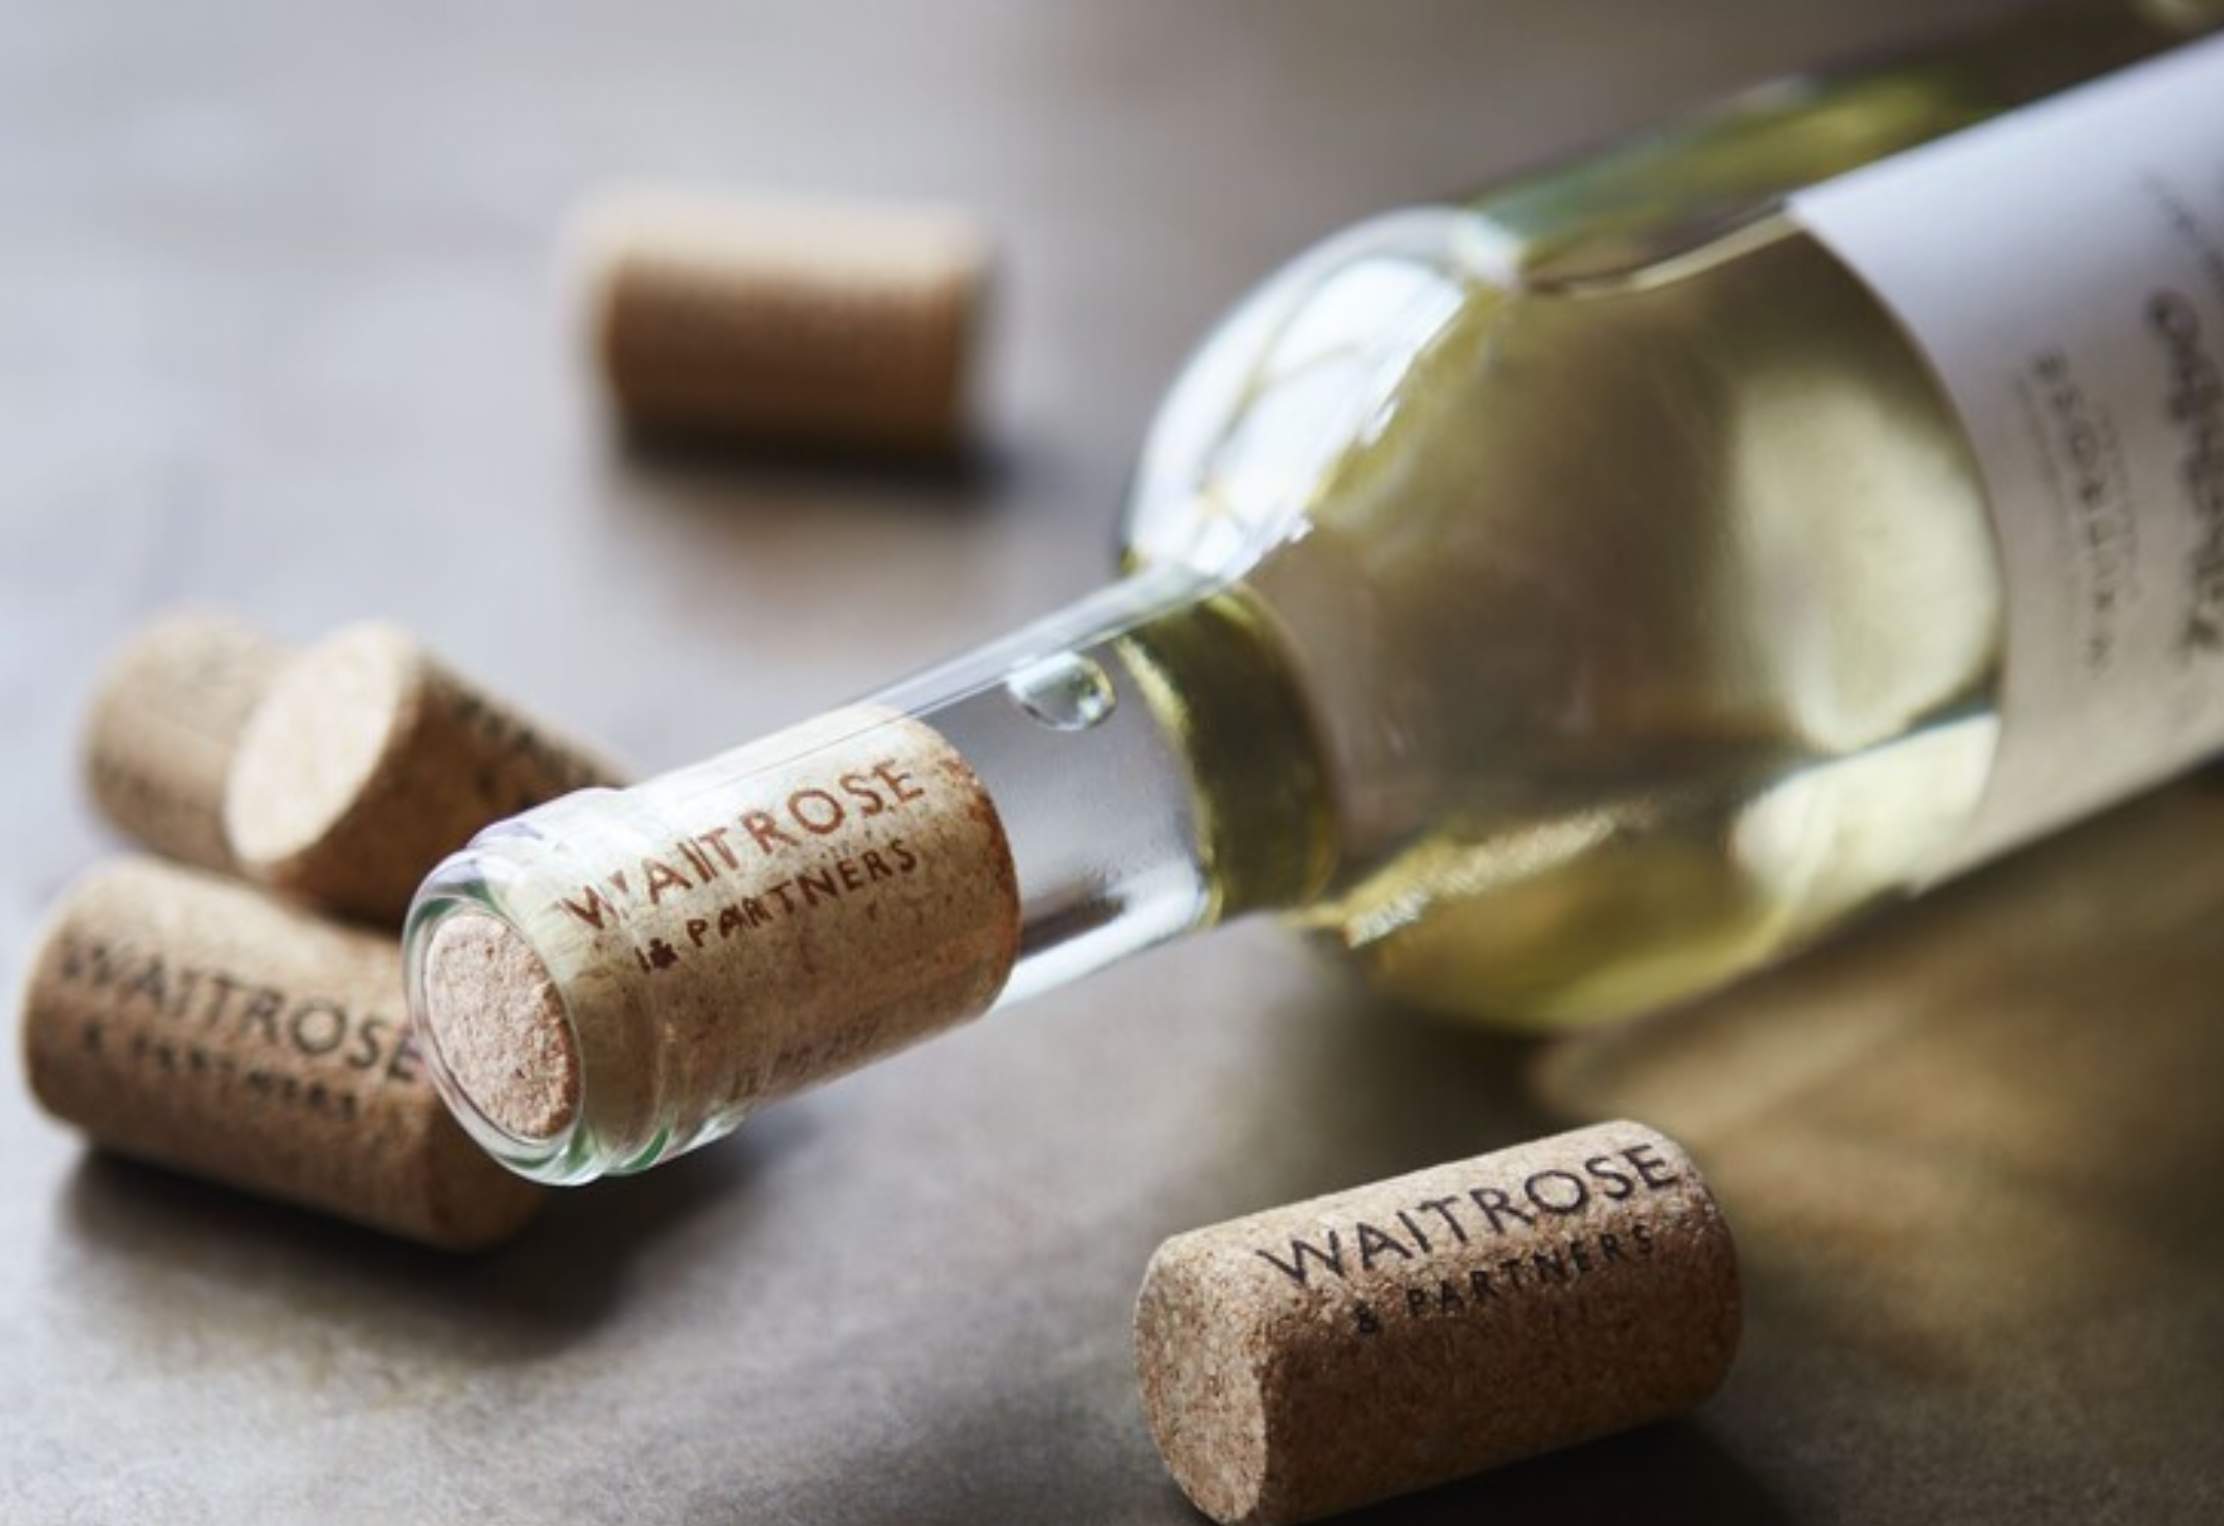 Waitrose trials removing wine bottle neck sleeves credit John Lewis Partnership